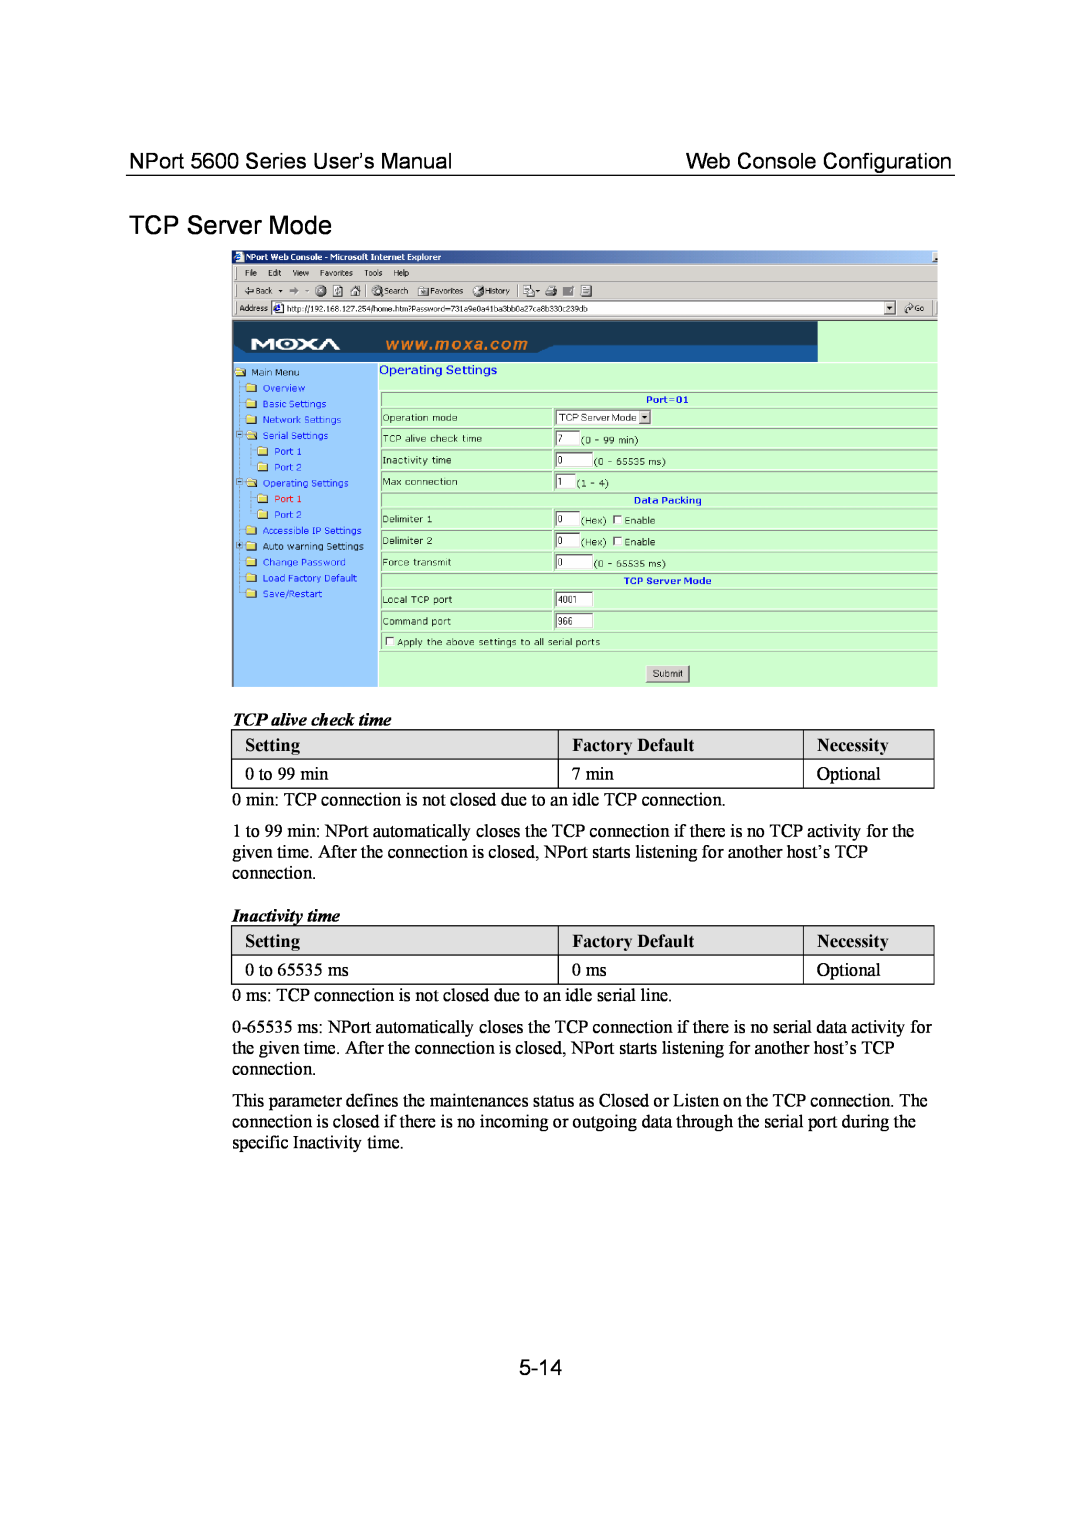 Moxa Technologies user manual TCP Server Mode, 5-14, NPort 5600 Series User’s Manual, Web Console Configuration 